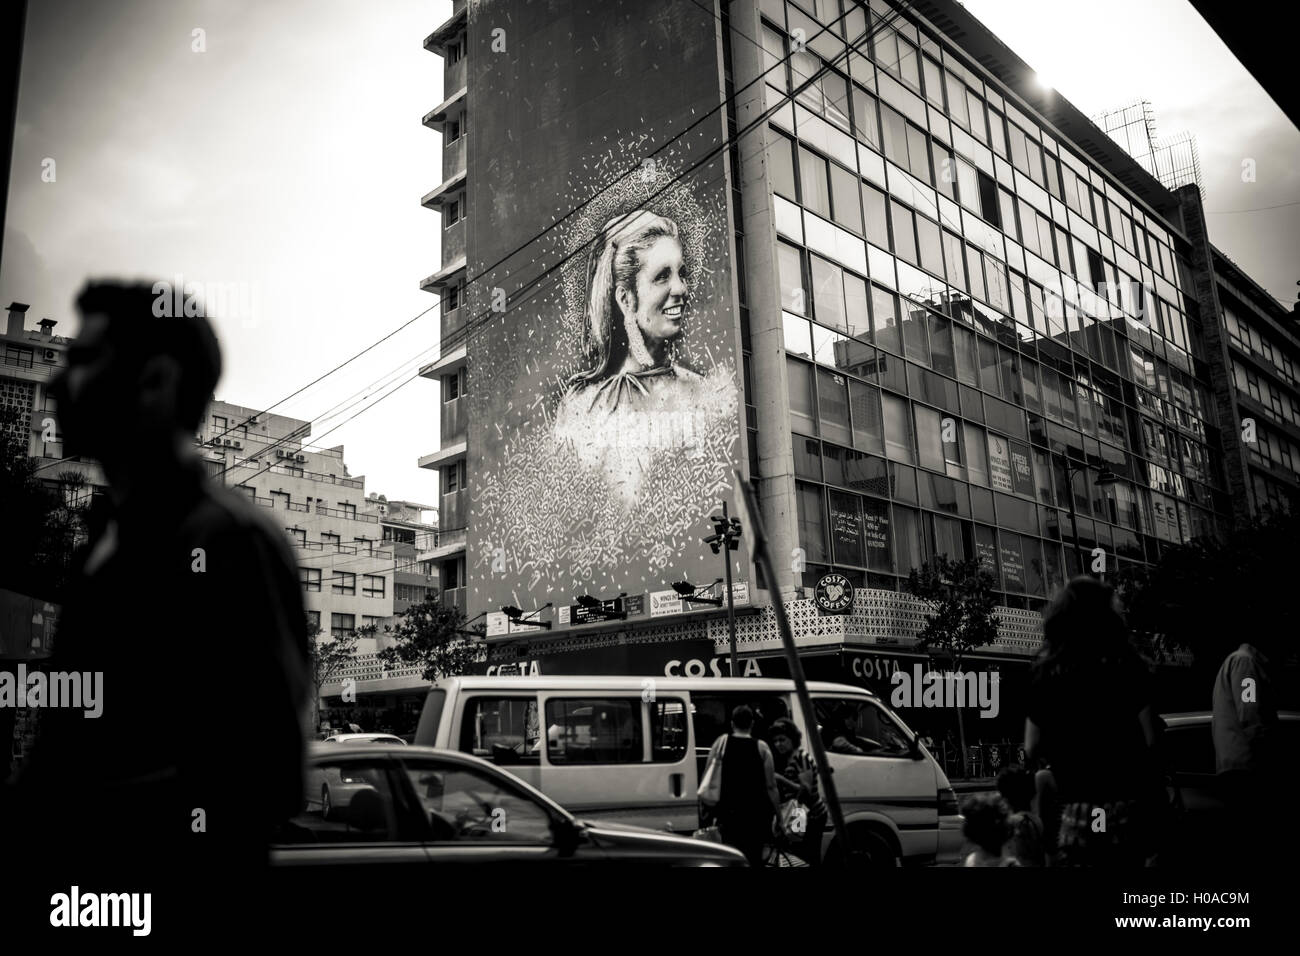 Les graffitis à Beyrouth - 10/09/2015 - Liban / Beyrouth - Hamra, Beyrouth, septembre 2015. Chanteuse libanaise Sabah par Yazan Halwani. - Bilal Tarabey / Le Pictorium Banque D'Images